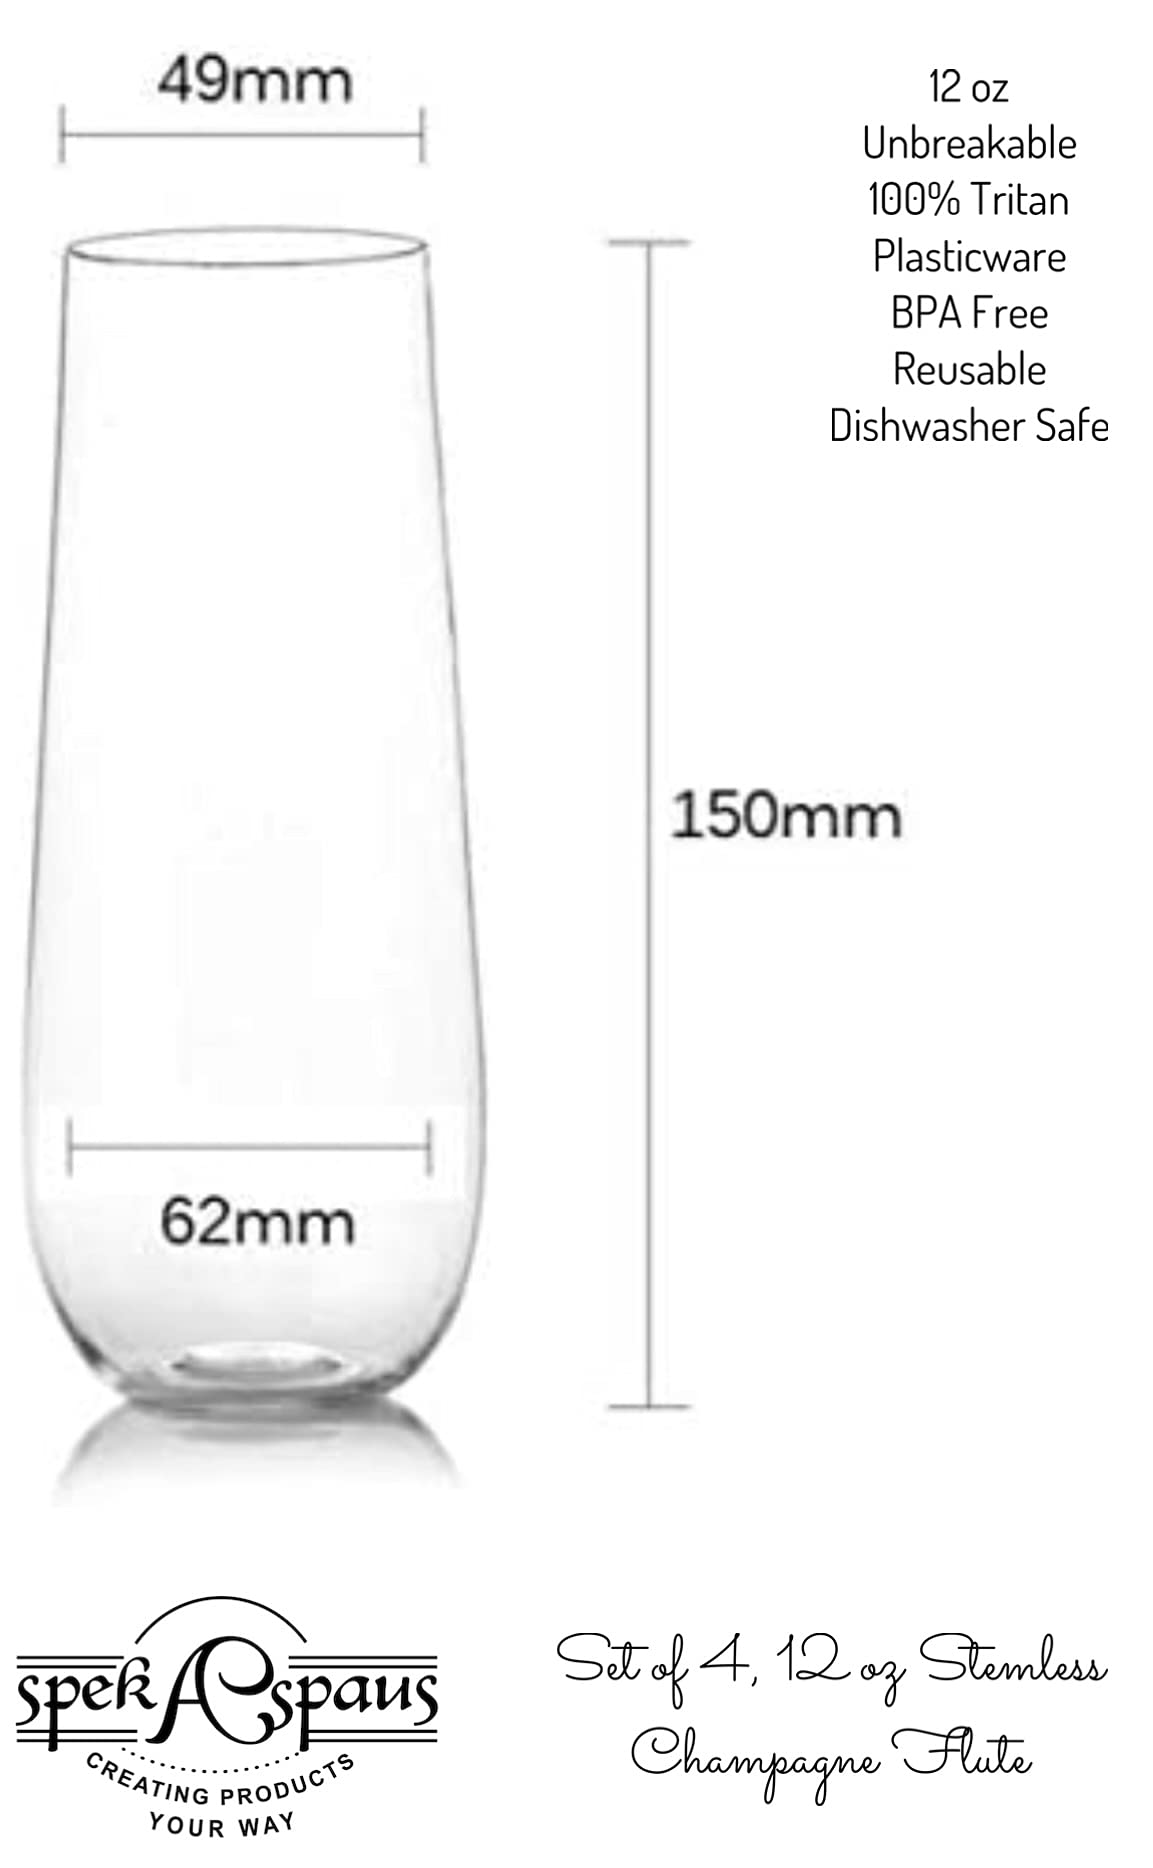 Spekaspaus TM 4 Unbreakable Stemless Champagne Flutes -12 oz-100% Tritan Plasticware - Shatterproof, Reusable, Dishwasher Safe, BPA-Free